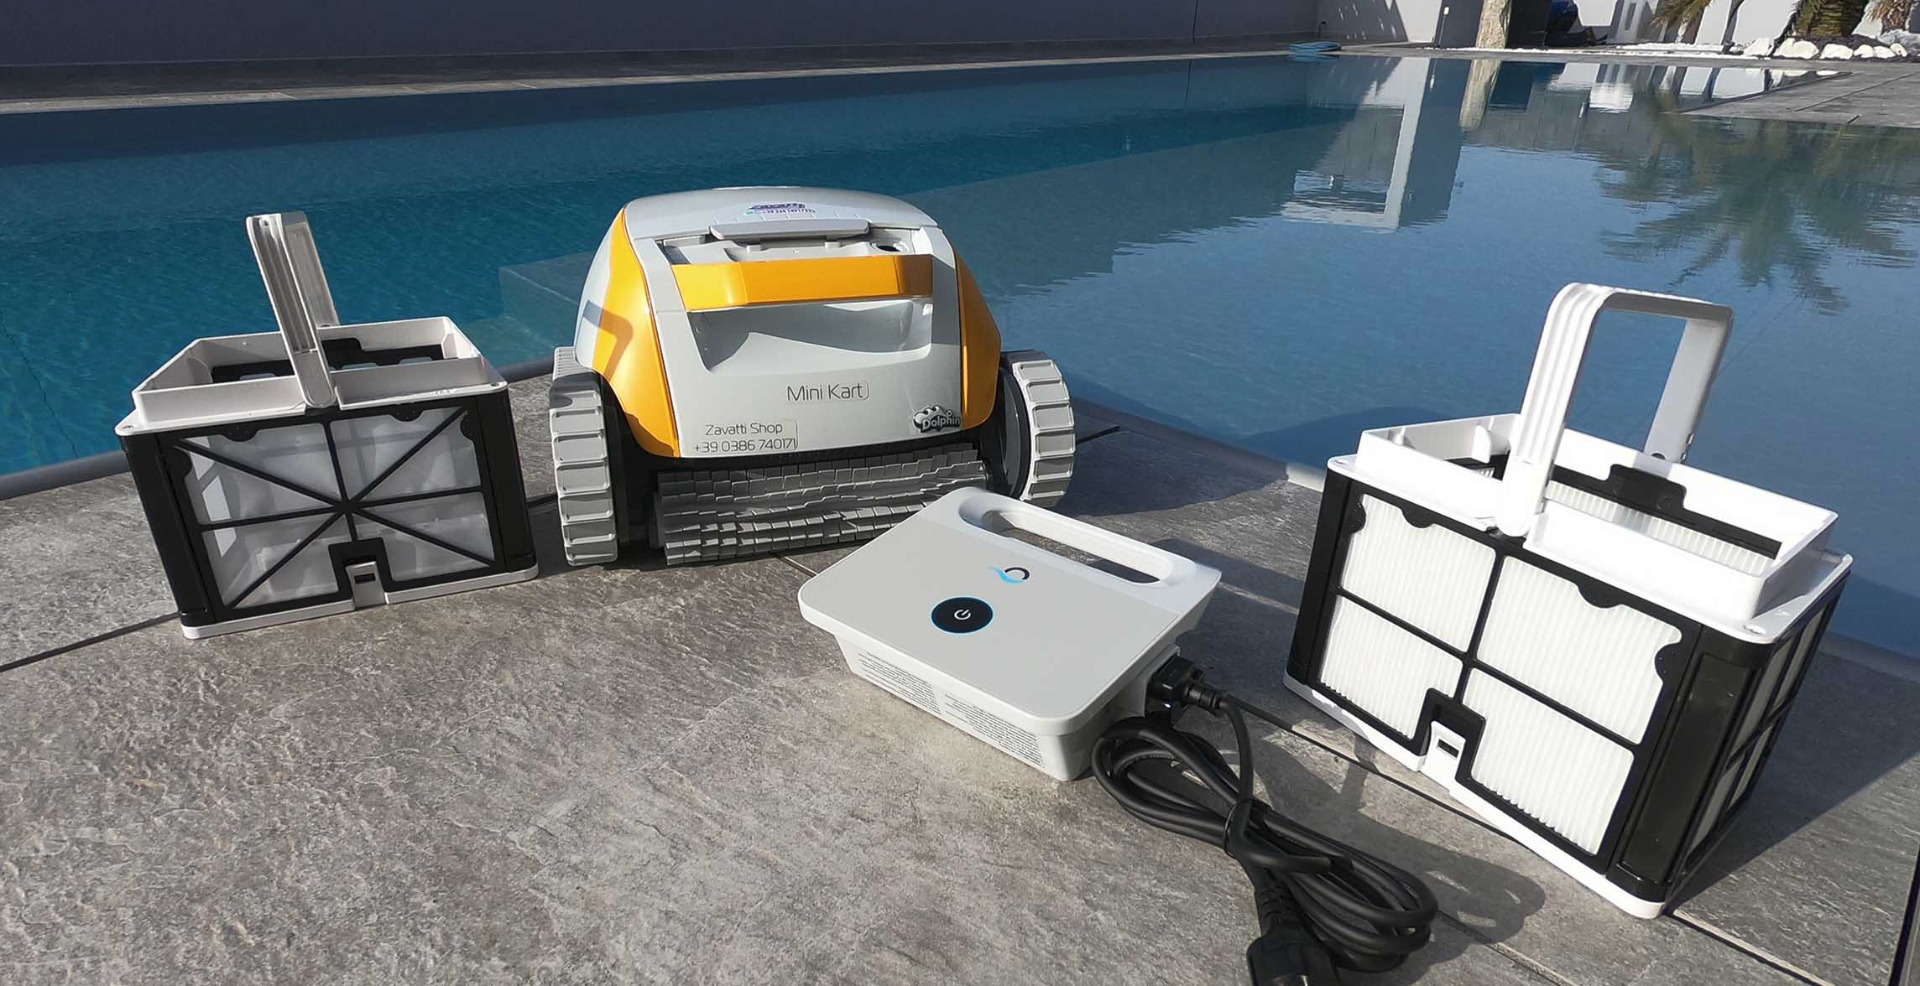 Robot pulitore per piscine Dolphin Mini Kart.